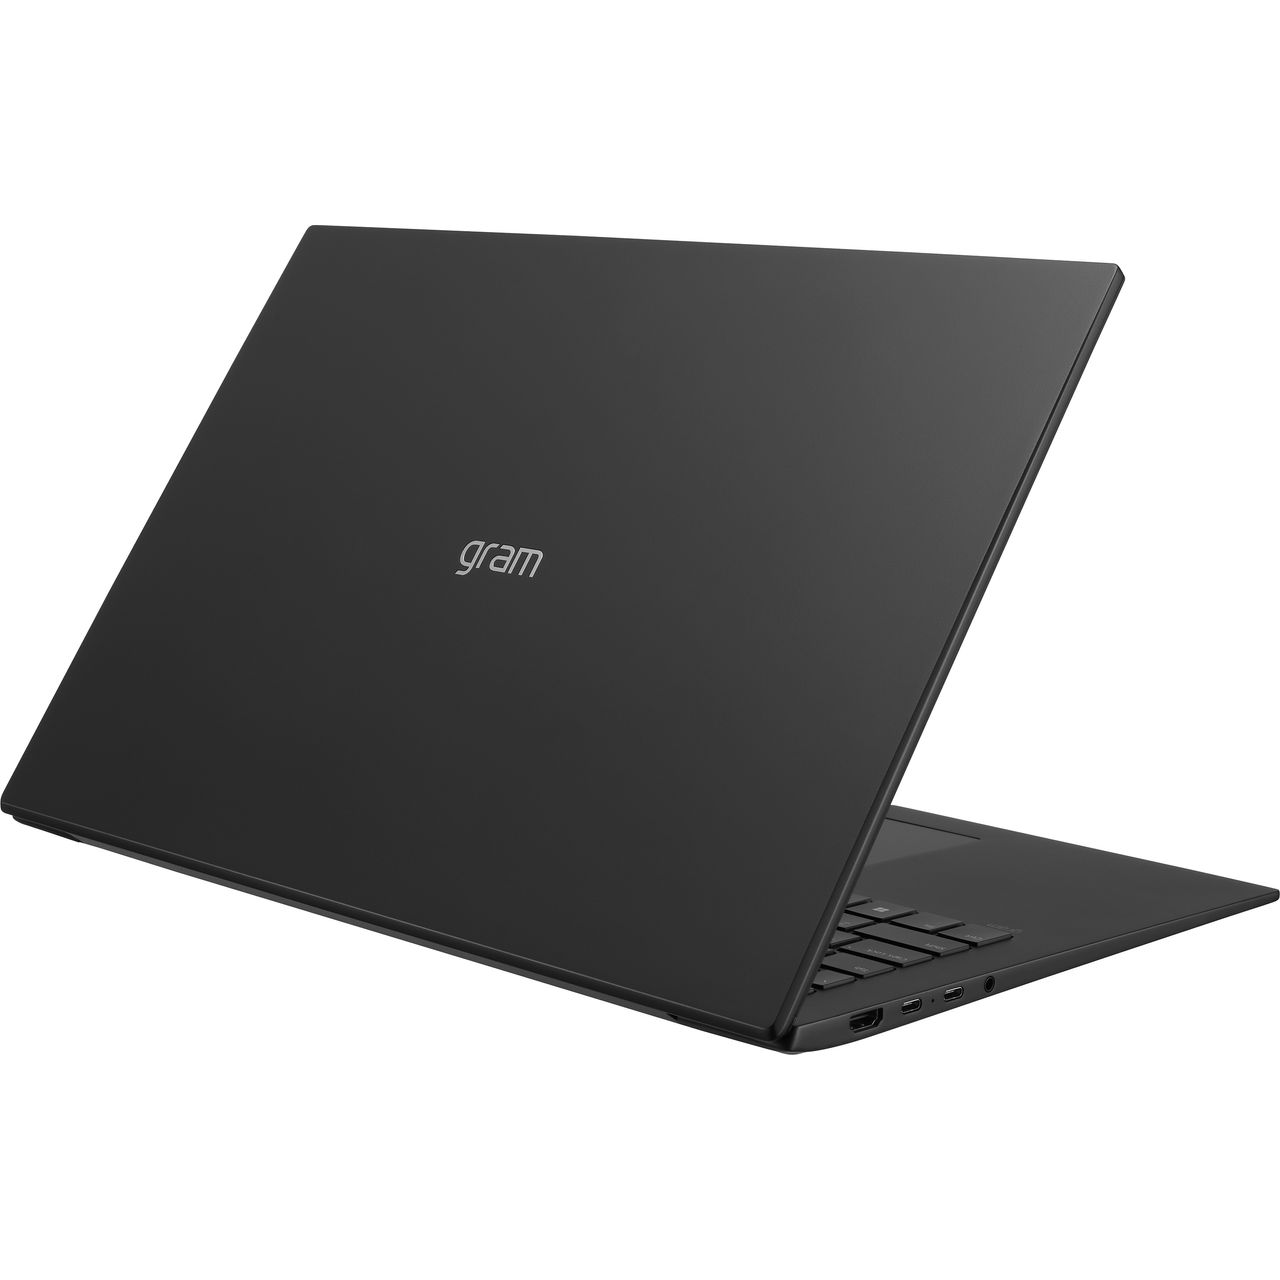 Buy LG gram 17 17Z90R-K.AD78A1 17 Laptop - Intel® Core™ i7, 1 TB